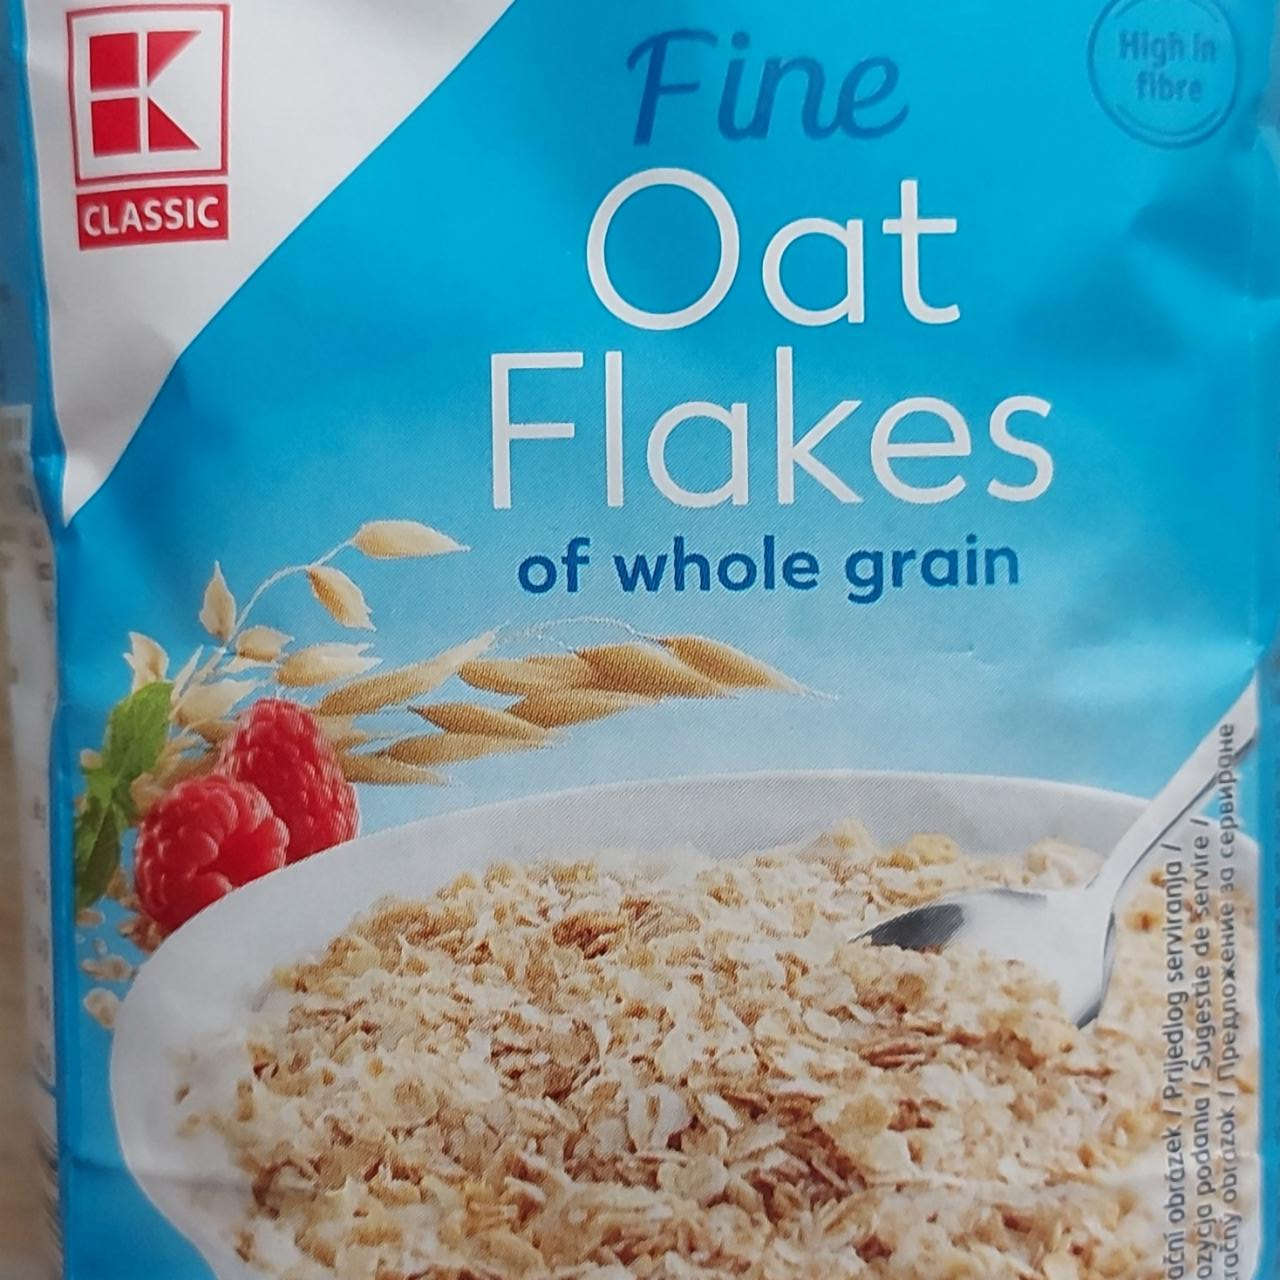 Fotografie - Fine oat flakes of whole grain K-Classic